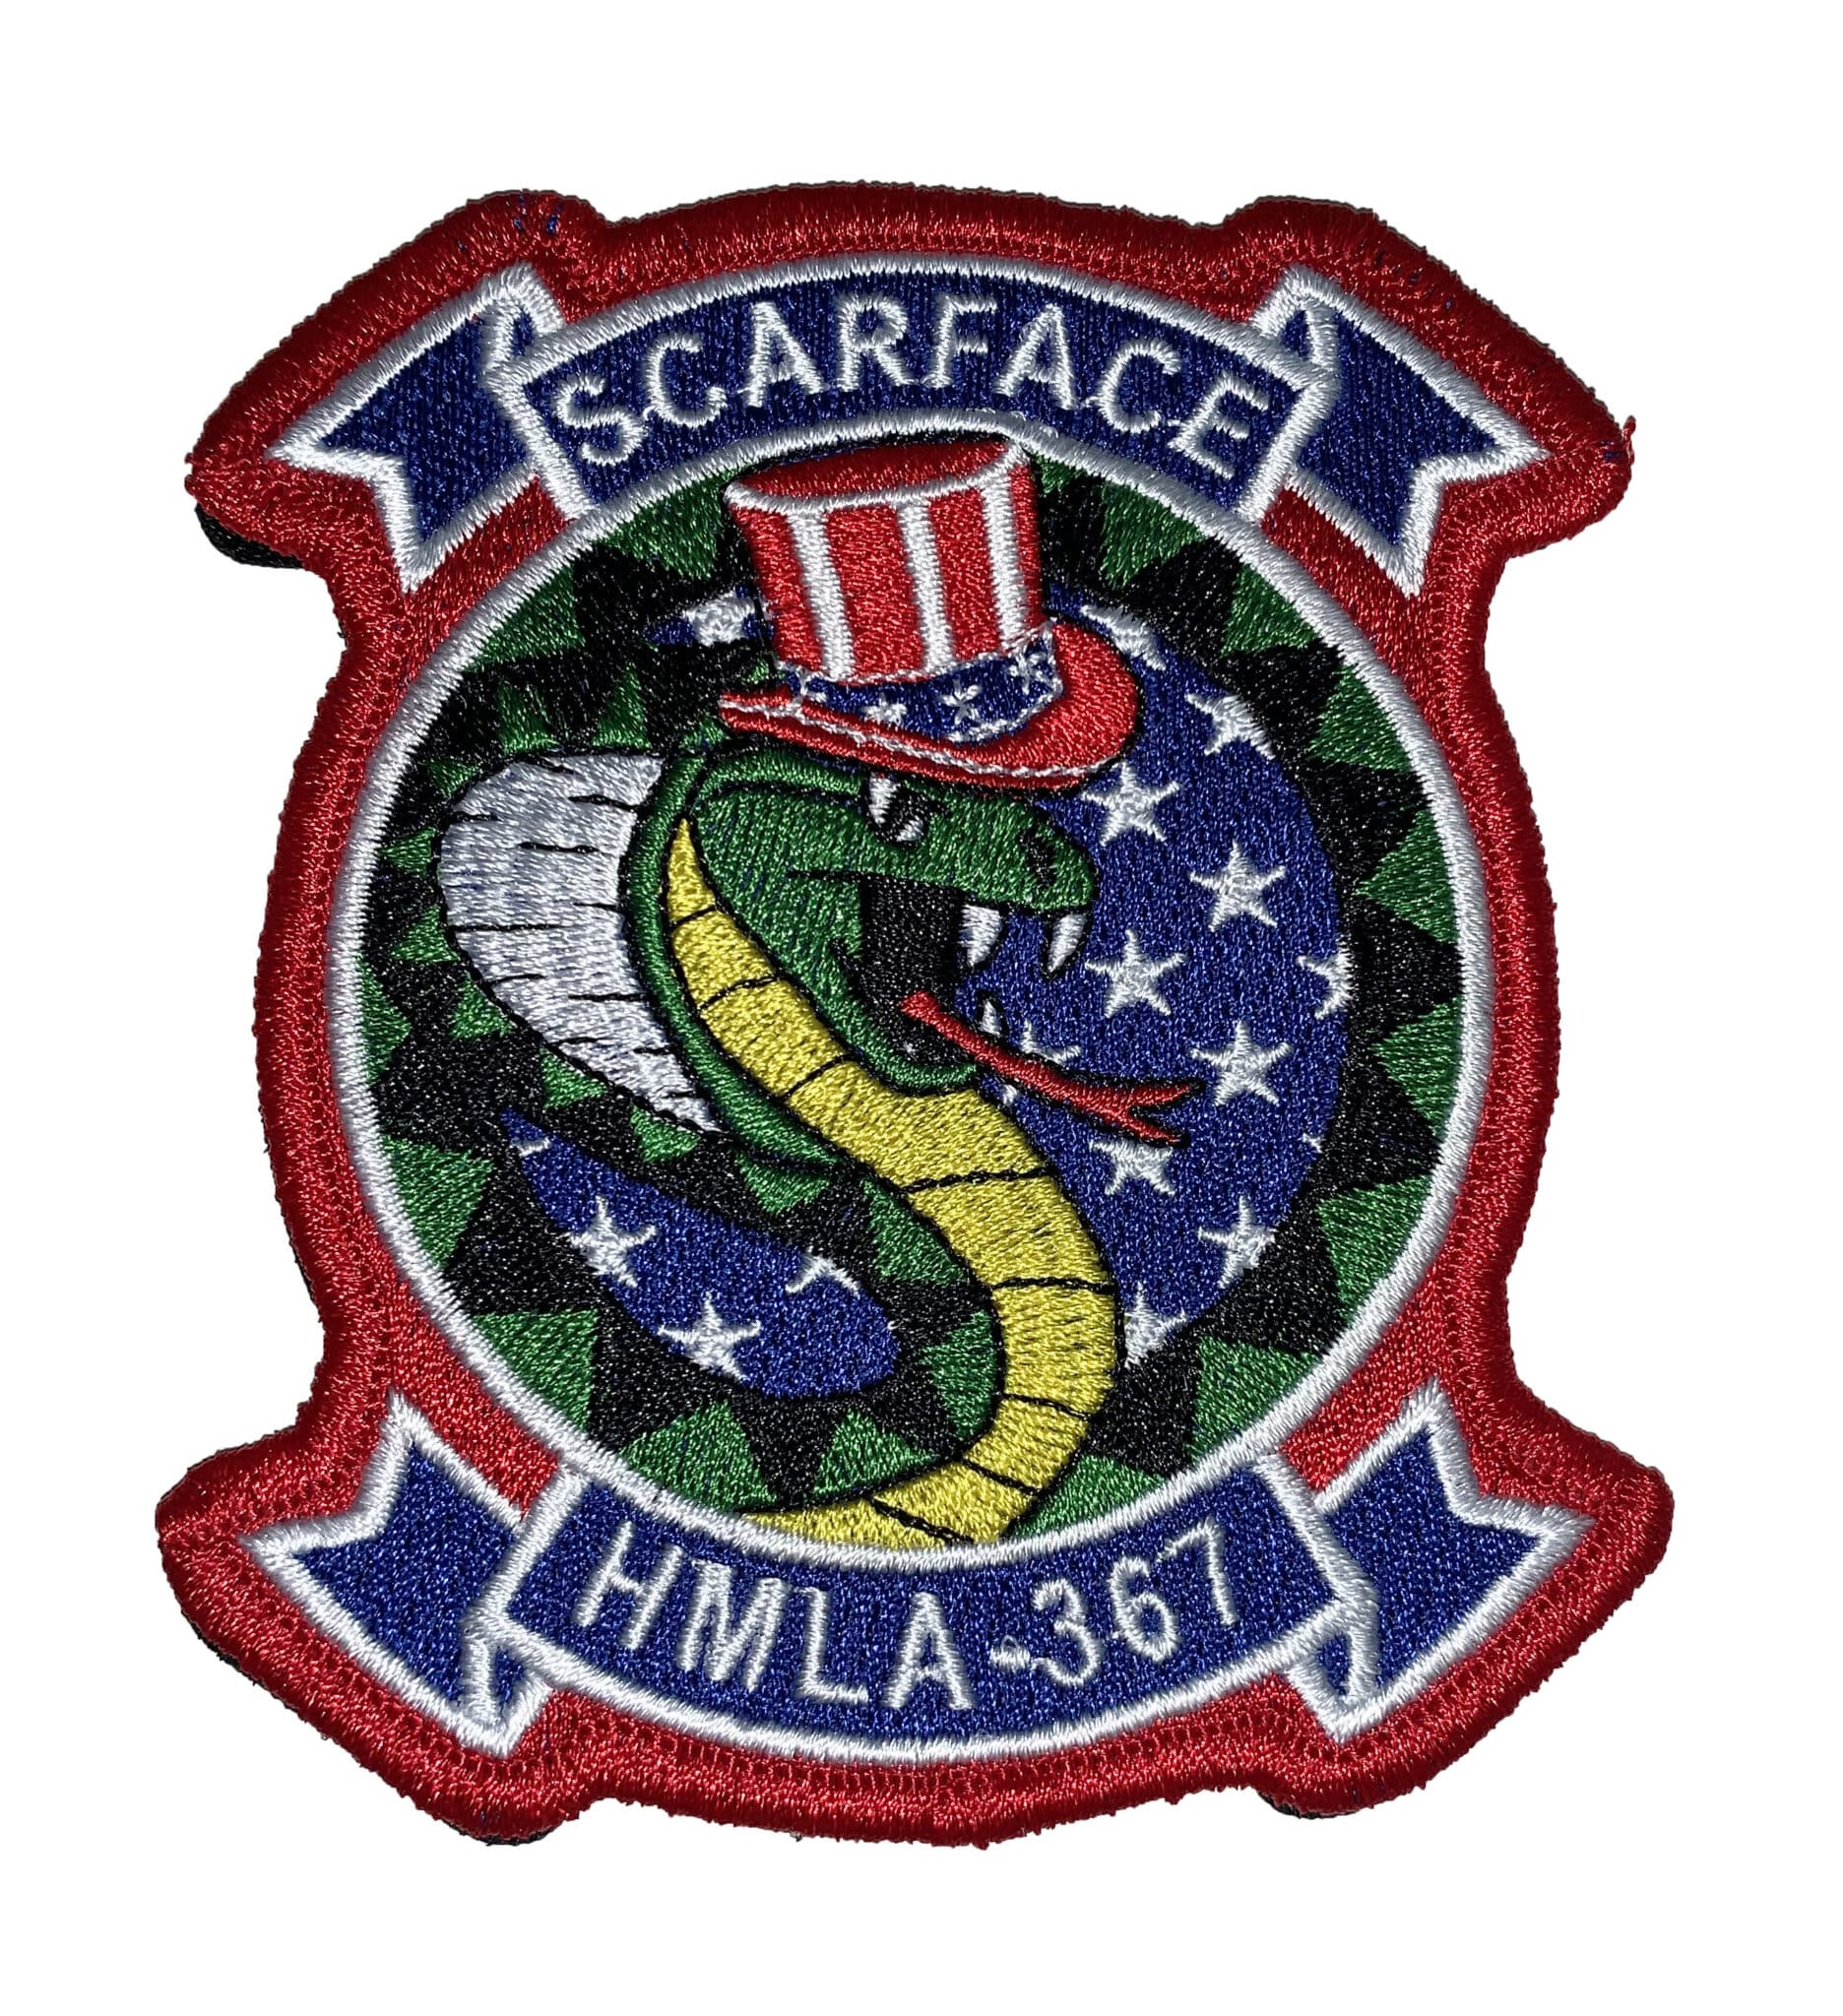 HMLA-367 Scarface 4th of July Patch